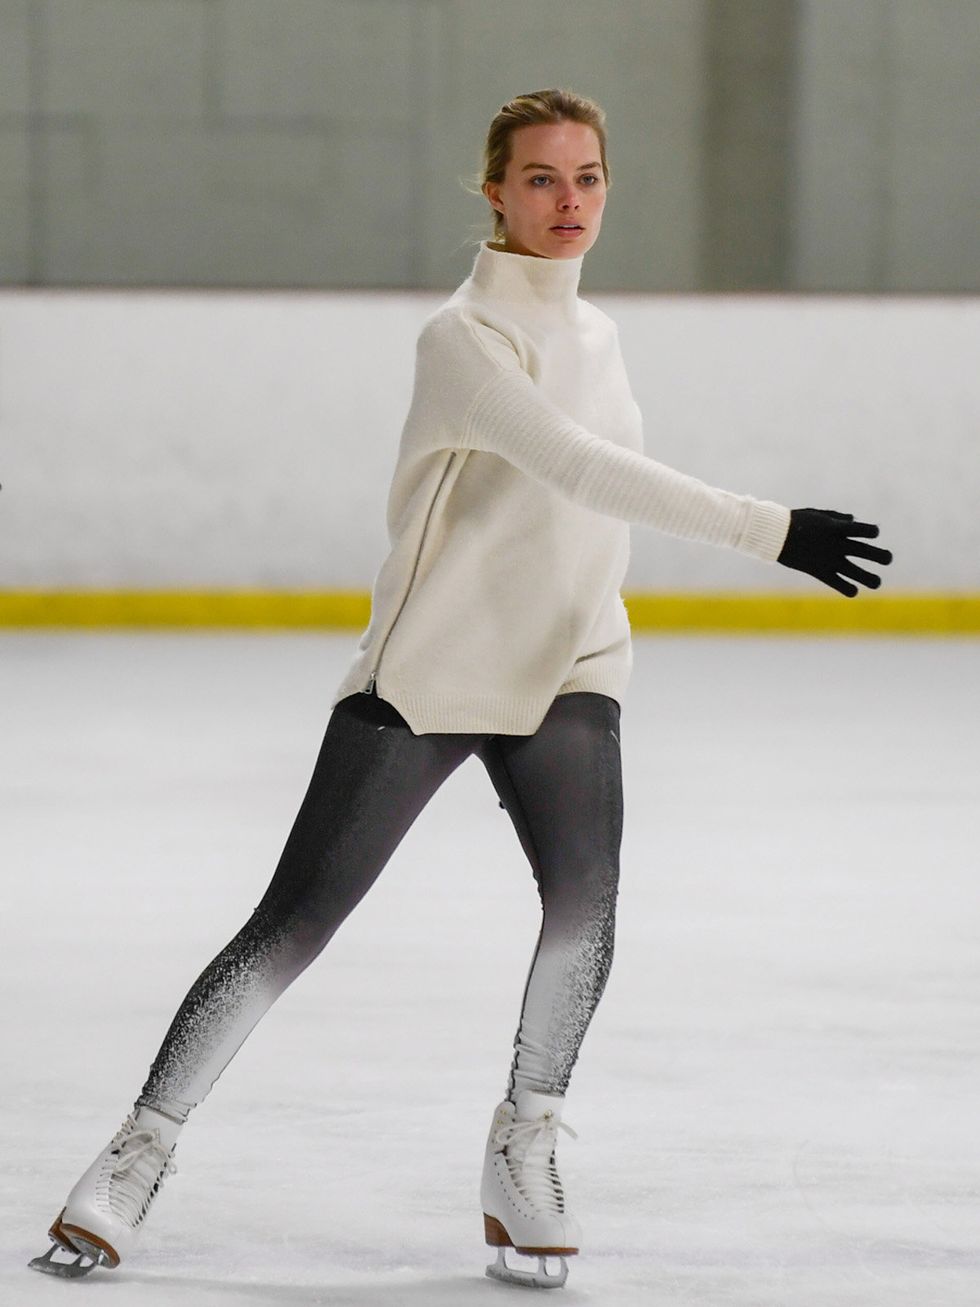 Figure skate, Ice skating, Skating, Ice skate, Ice rink, Figure skating, Recreation, Axel jump, Sports equipment, Sports, 